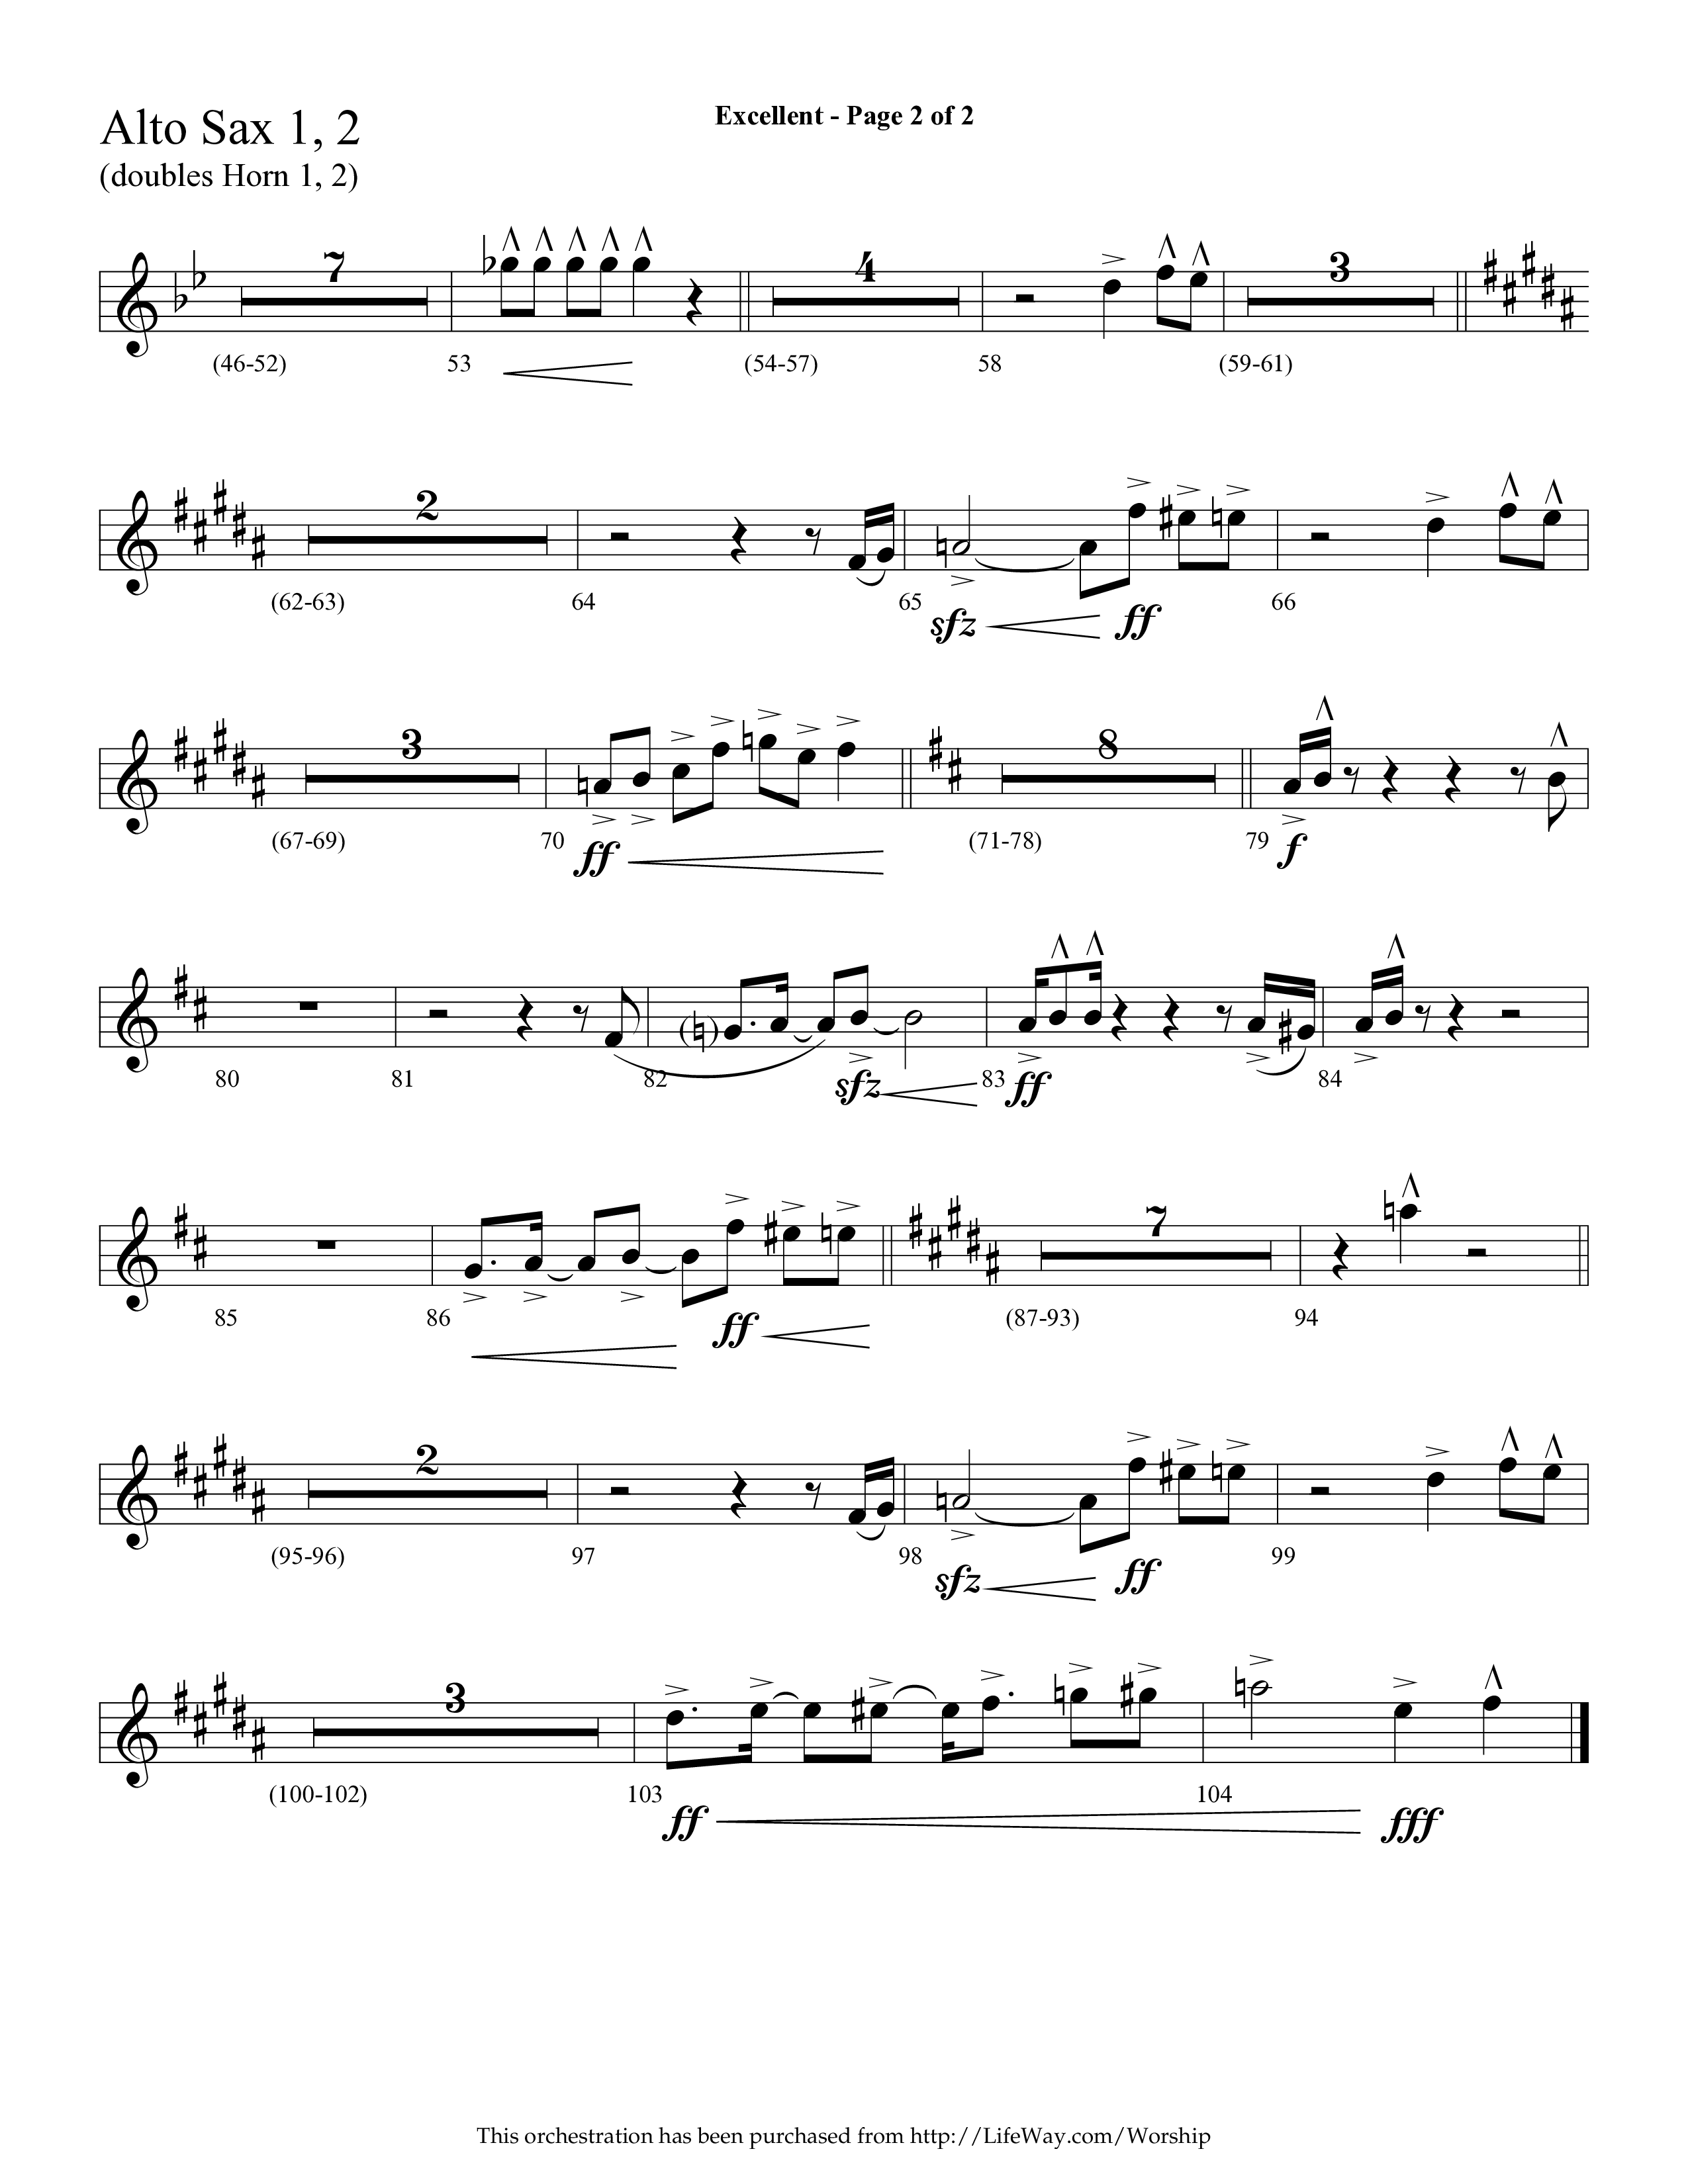 Excellent (Choral Anthem SATB) Alto Sax 1/2 (Lifeway Choral / Arr. Cliff Duren)